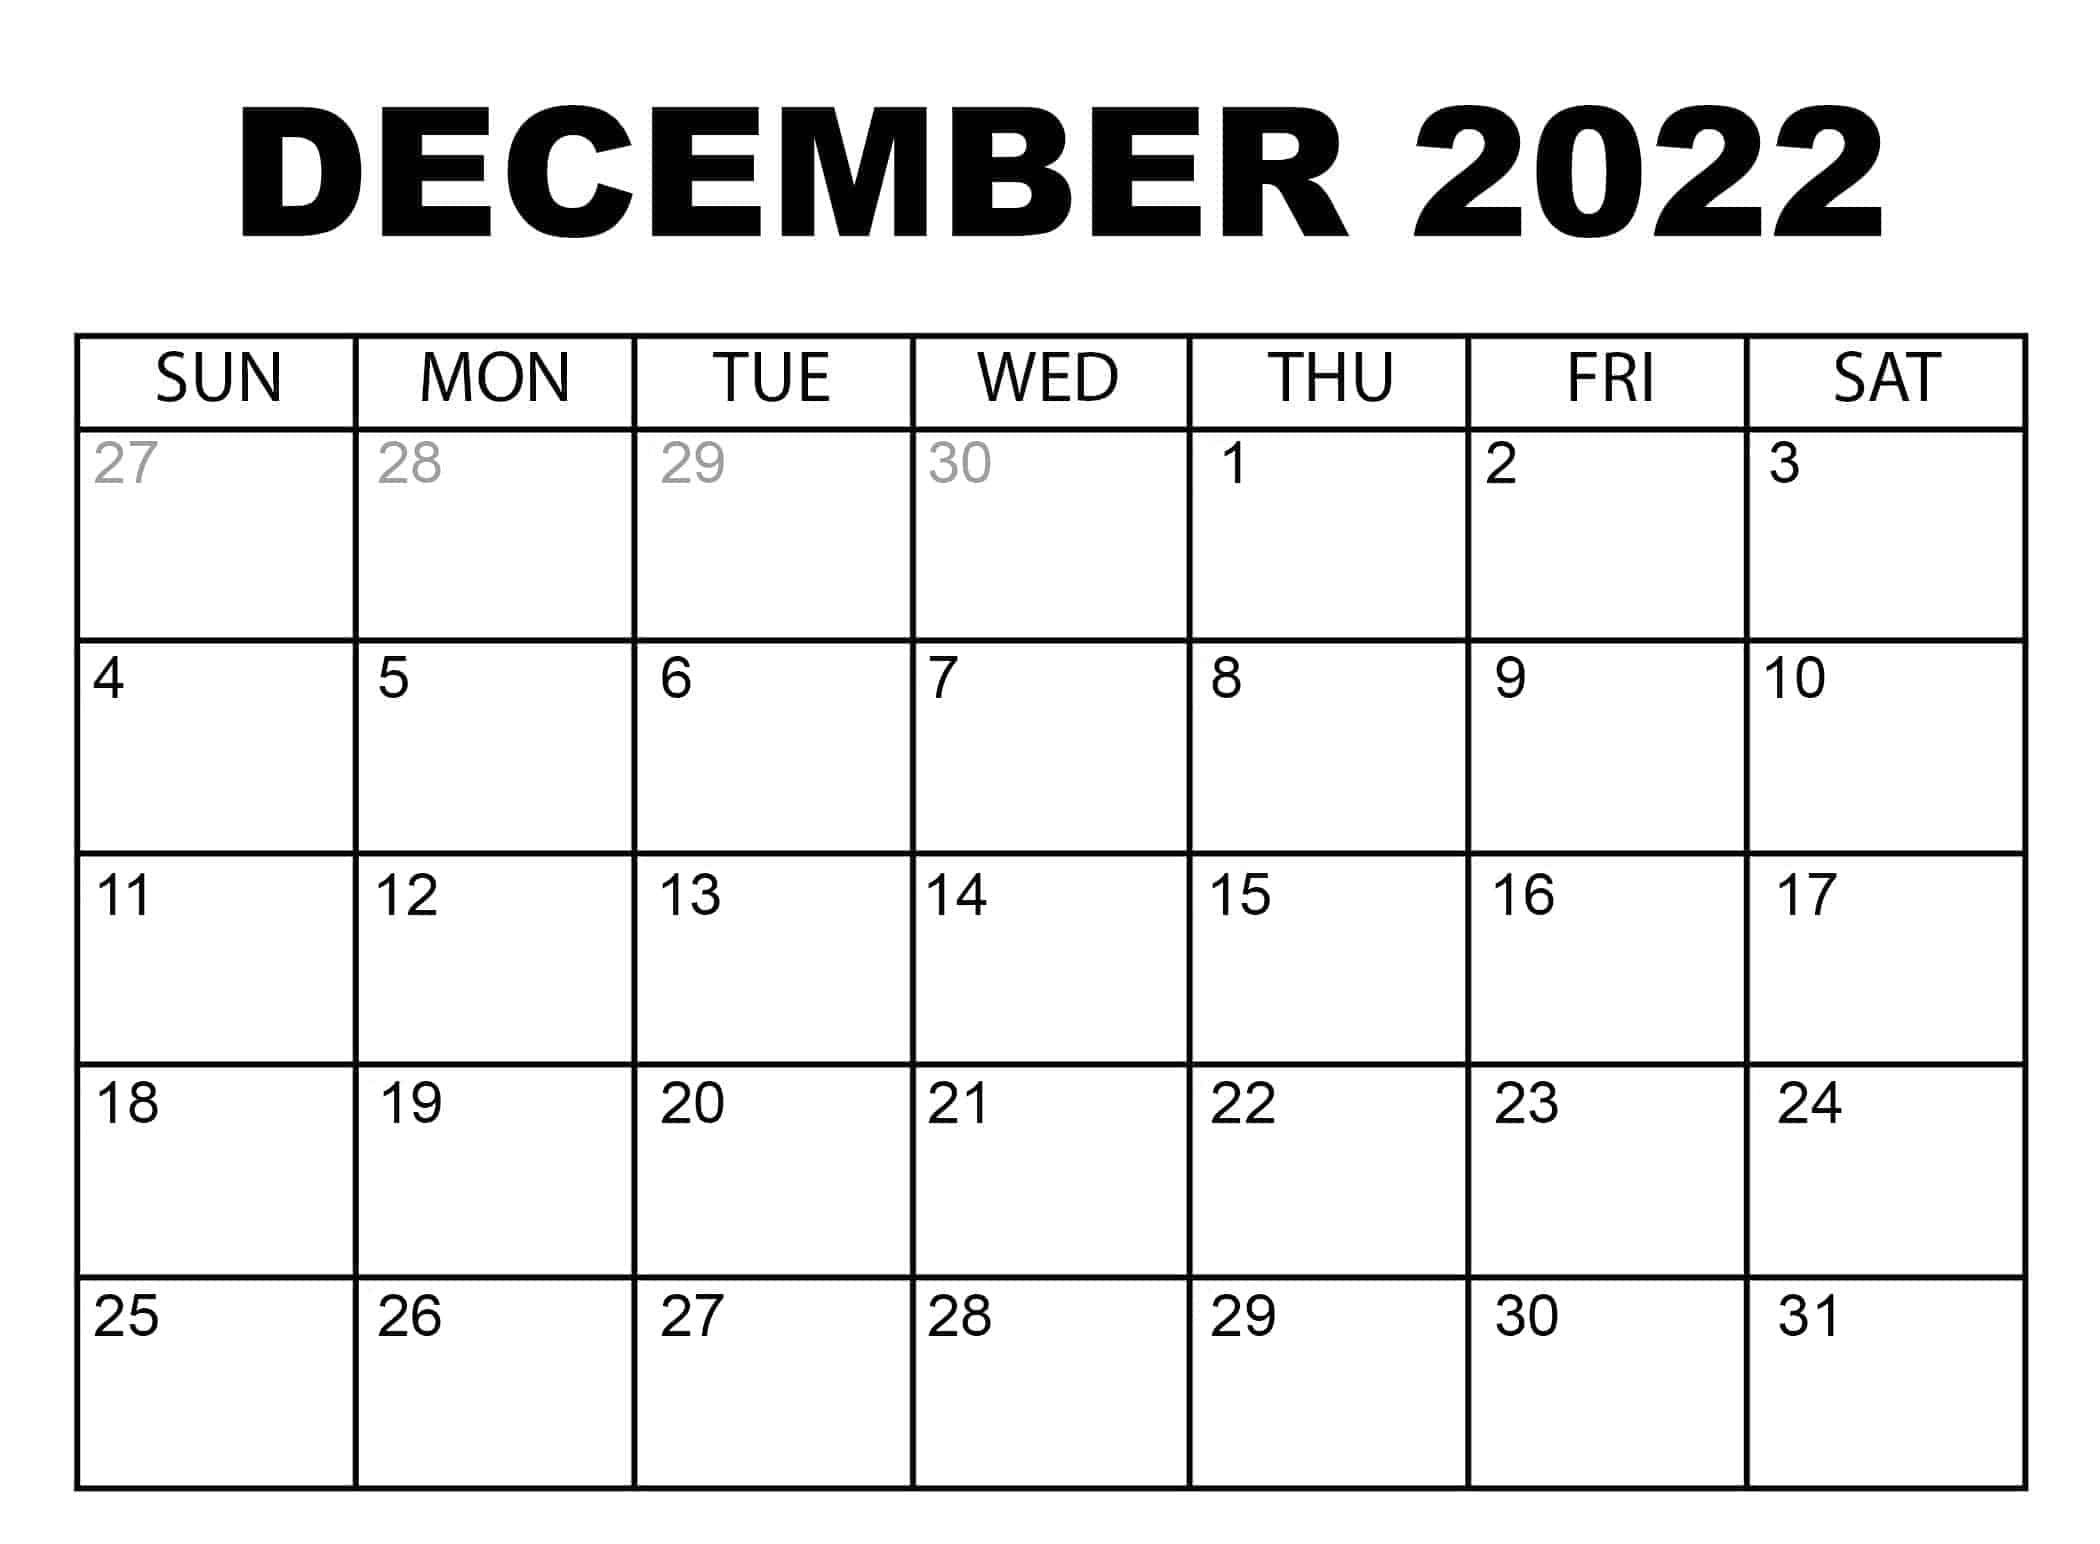 December 2022 Printable Calendar PDF